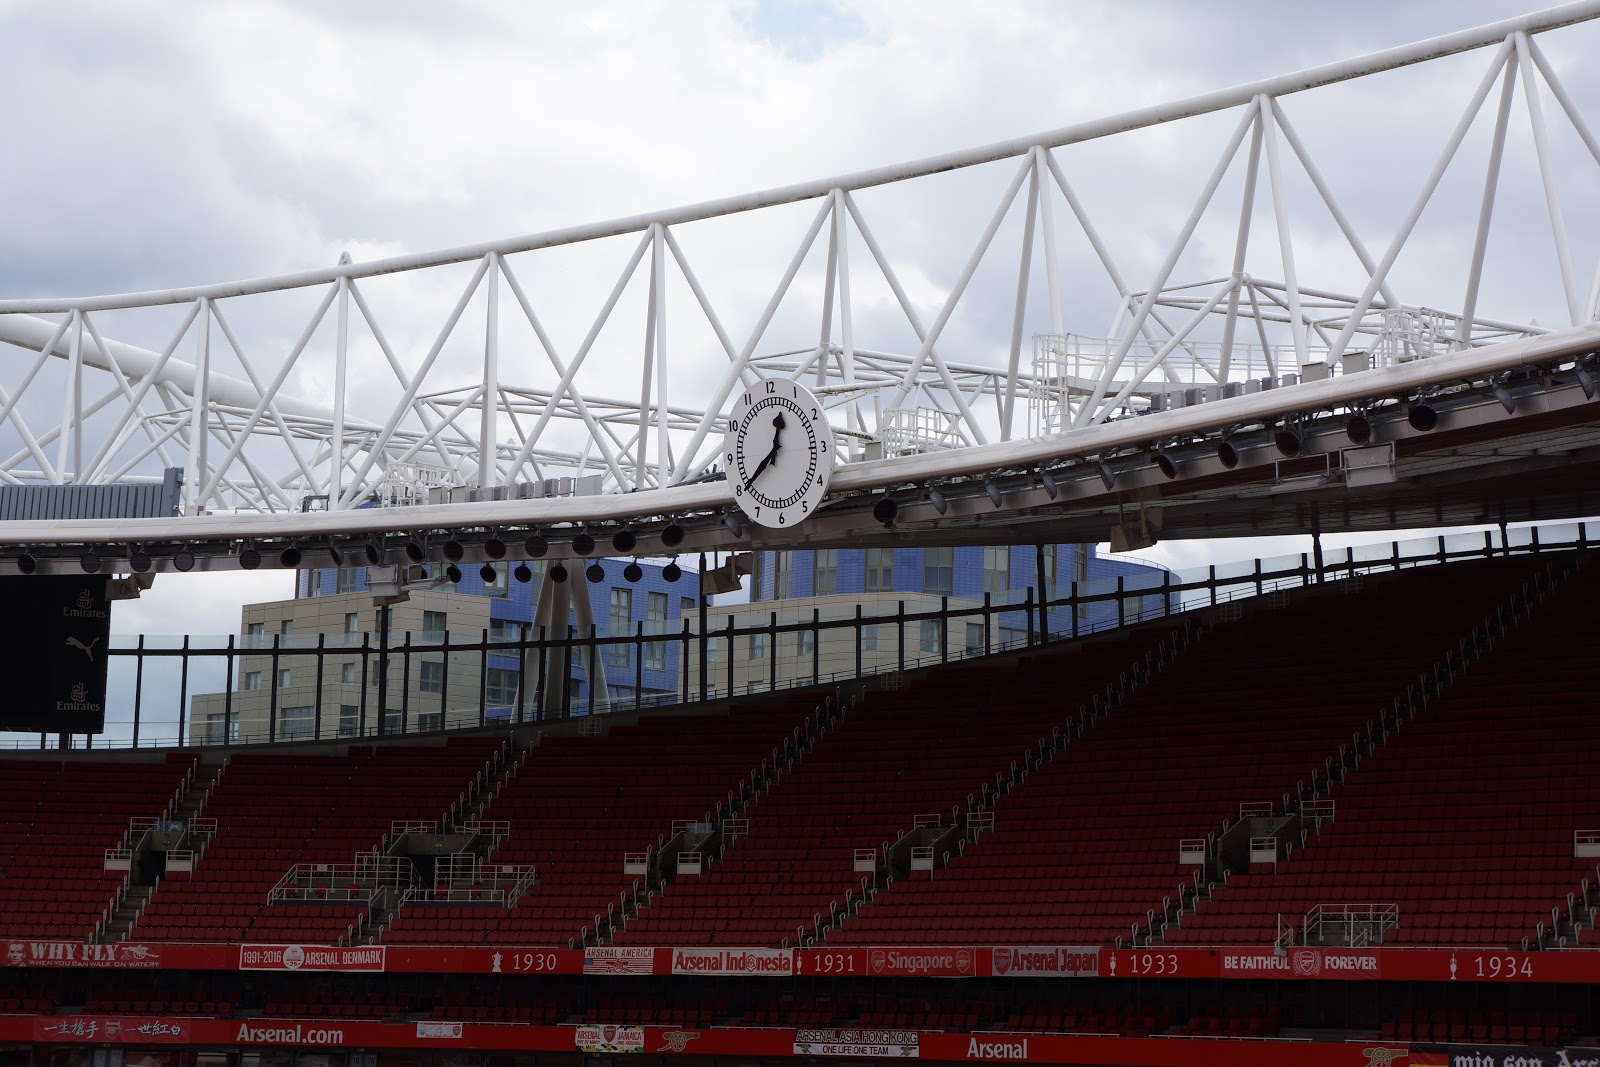 Arsenal Stadium clock